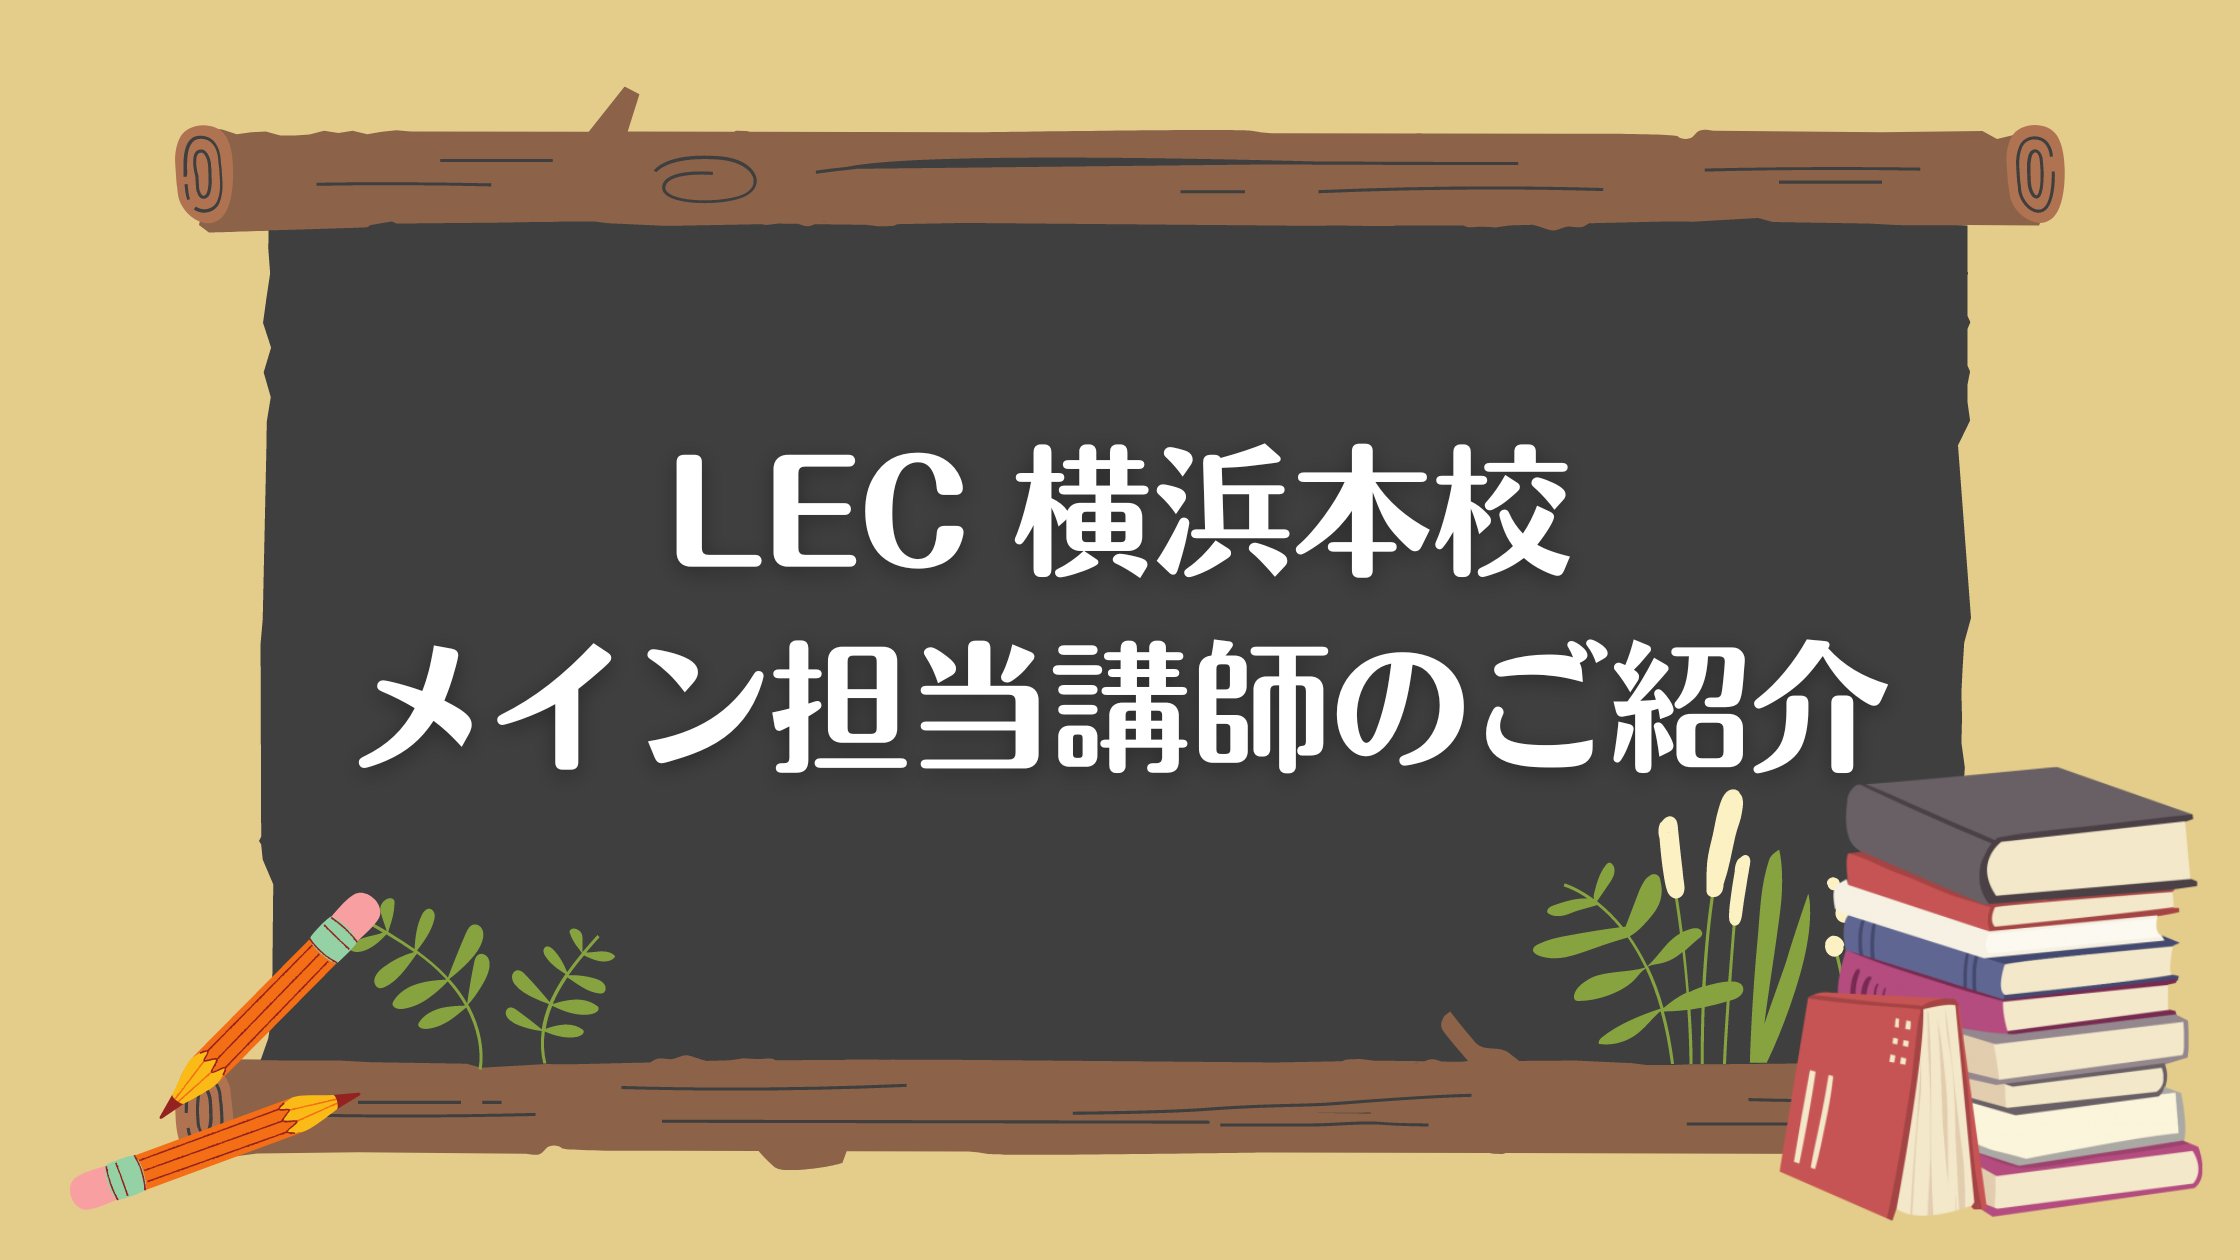 ◆LEC 横浜本校 メイン担当講師のご紹介◆